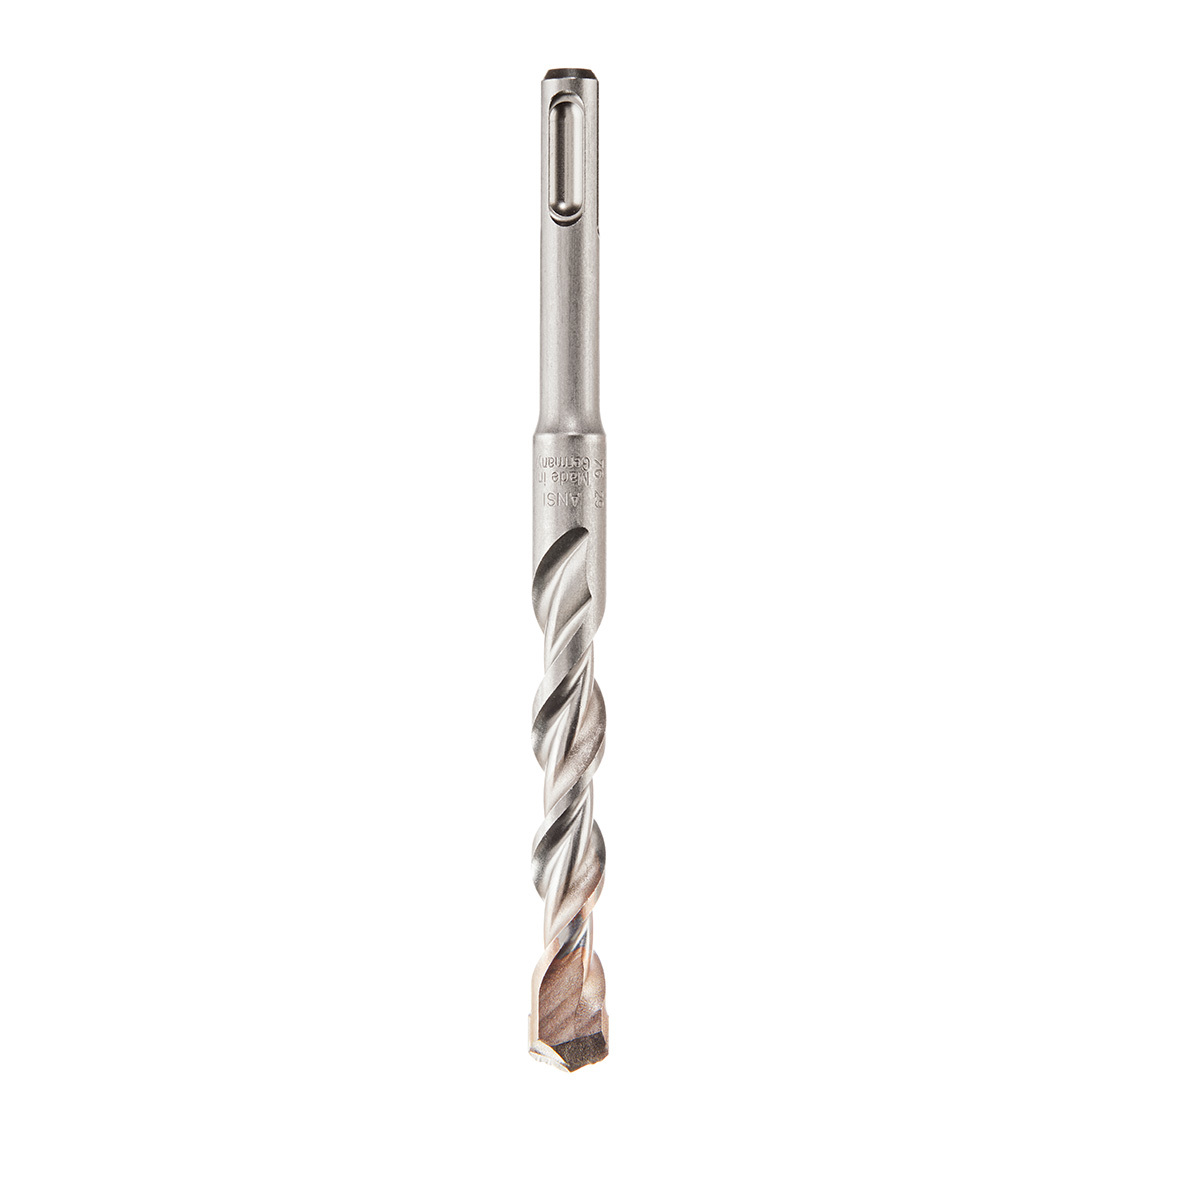 Milwaukee 7pc Hammer Drill Carbide Bit Kit 48-20-8857 New